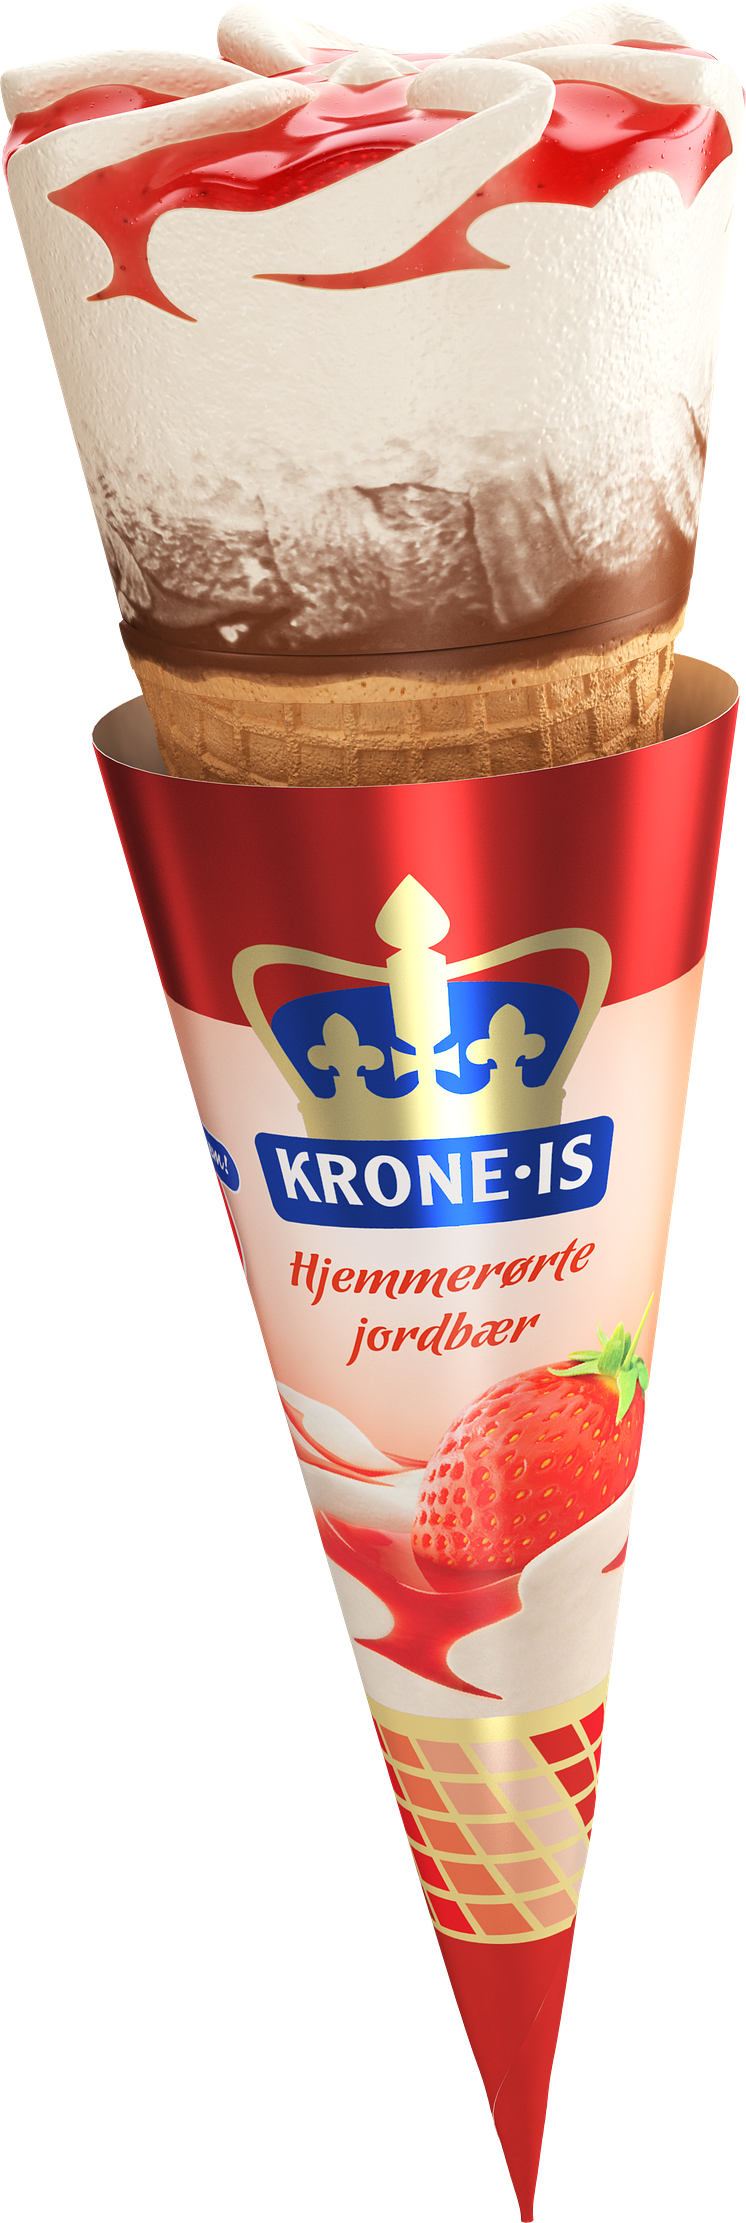 Krone-is Jordbær